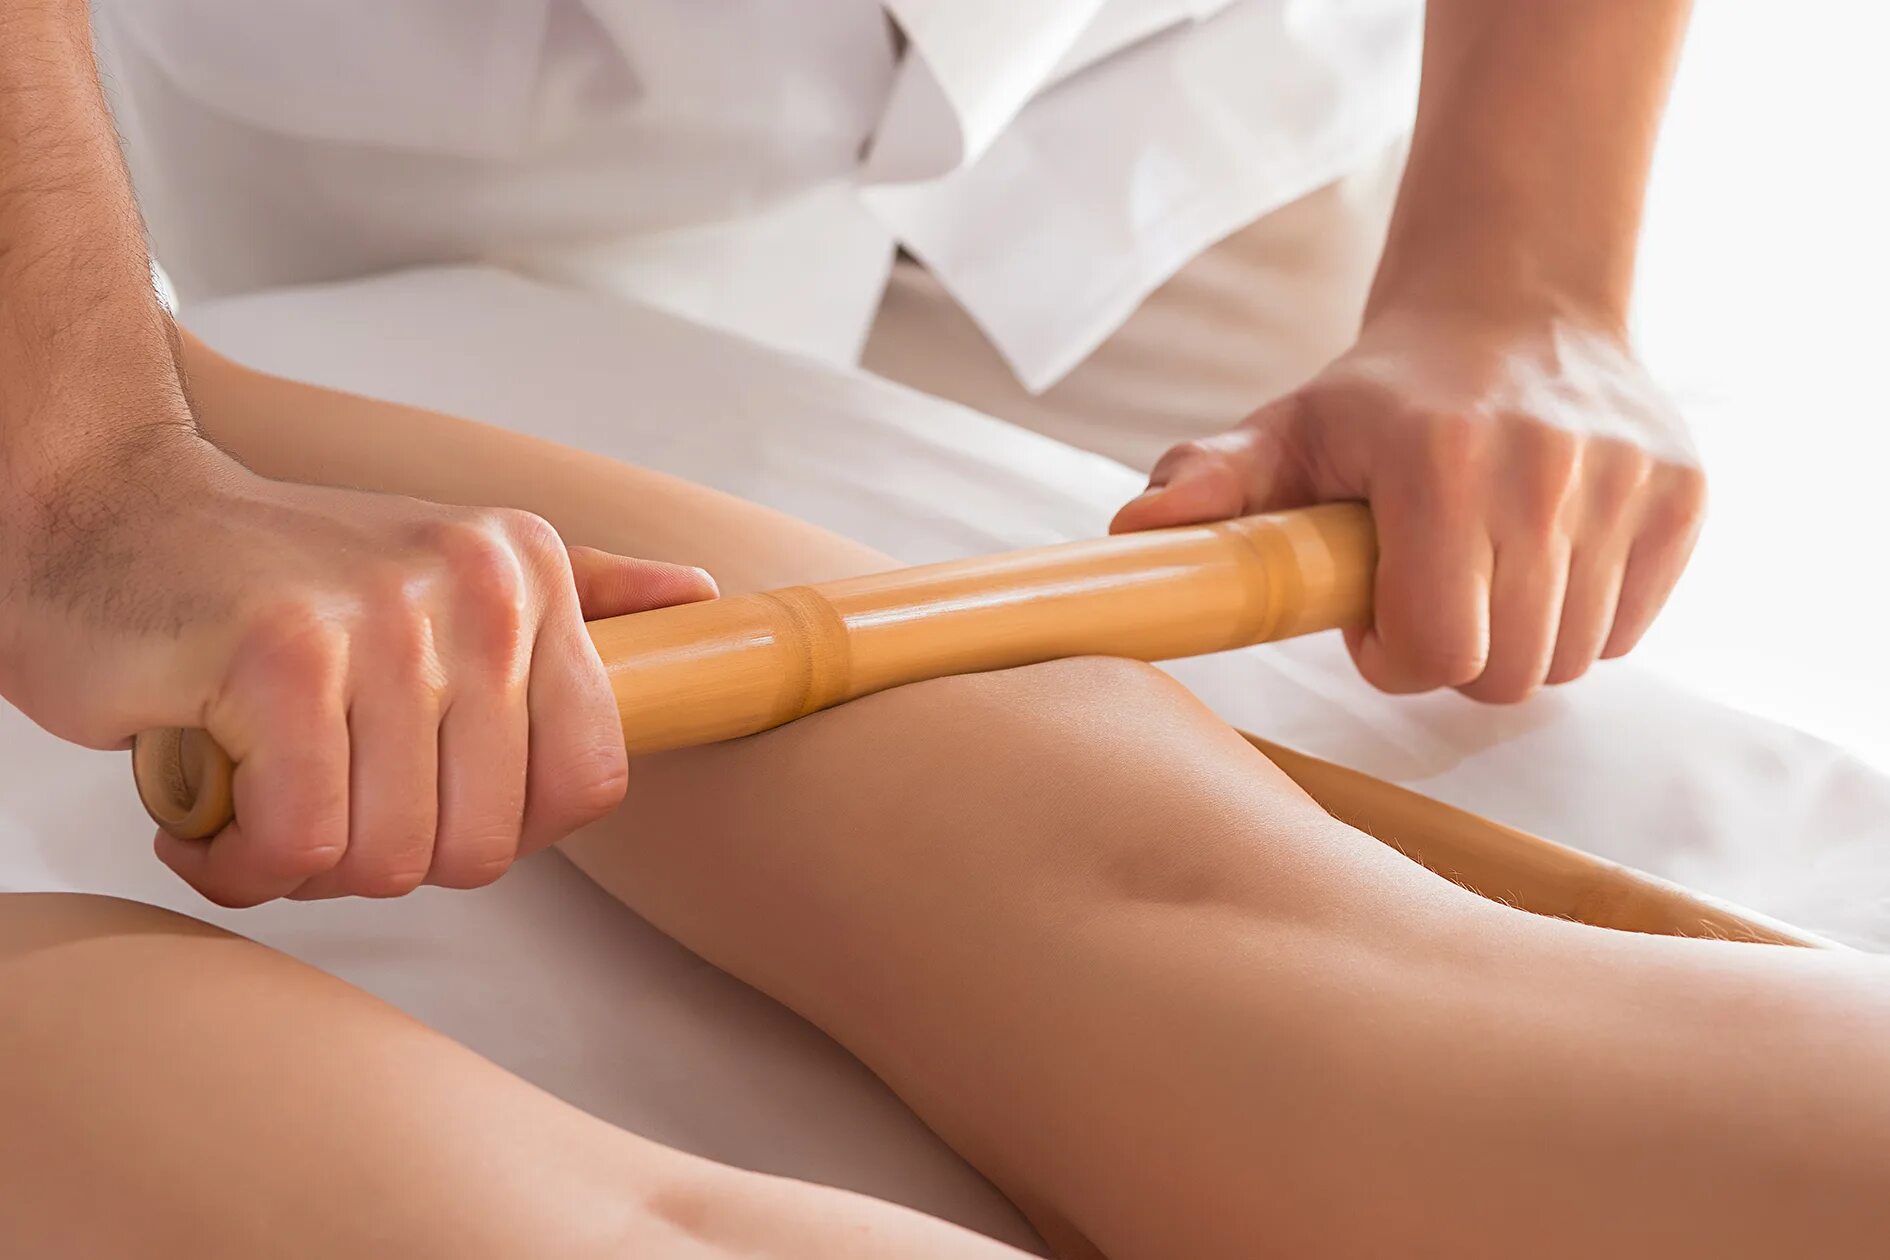 Massage stick. Антицеллюлитный массаж бамбуковыми палочками. Палка для антицеллюлитного массажа. Массаж ног бамбуковыми палочками. Креольский массаж бамбуковыми палками.